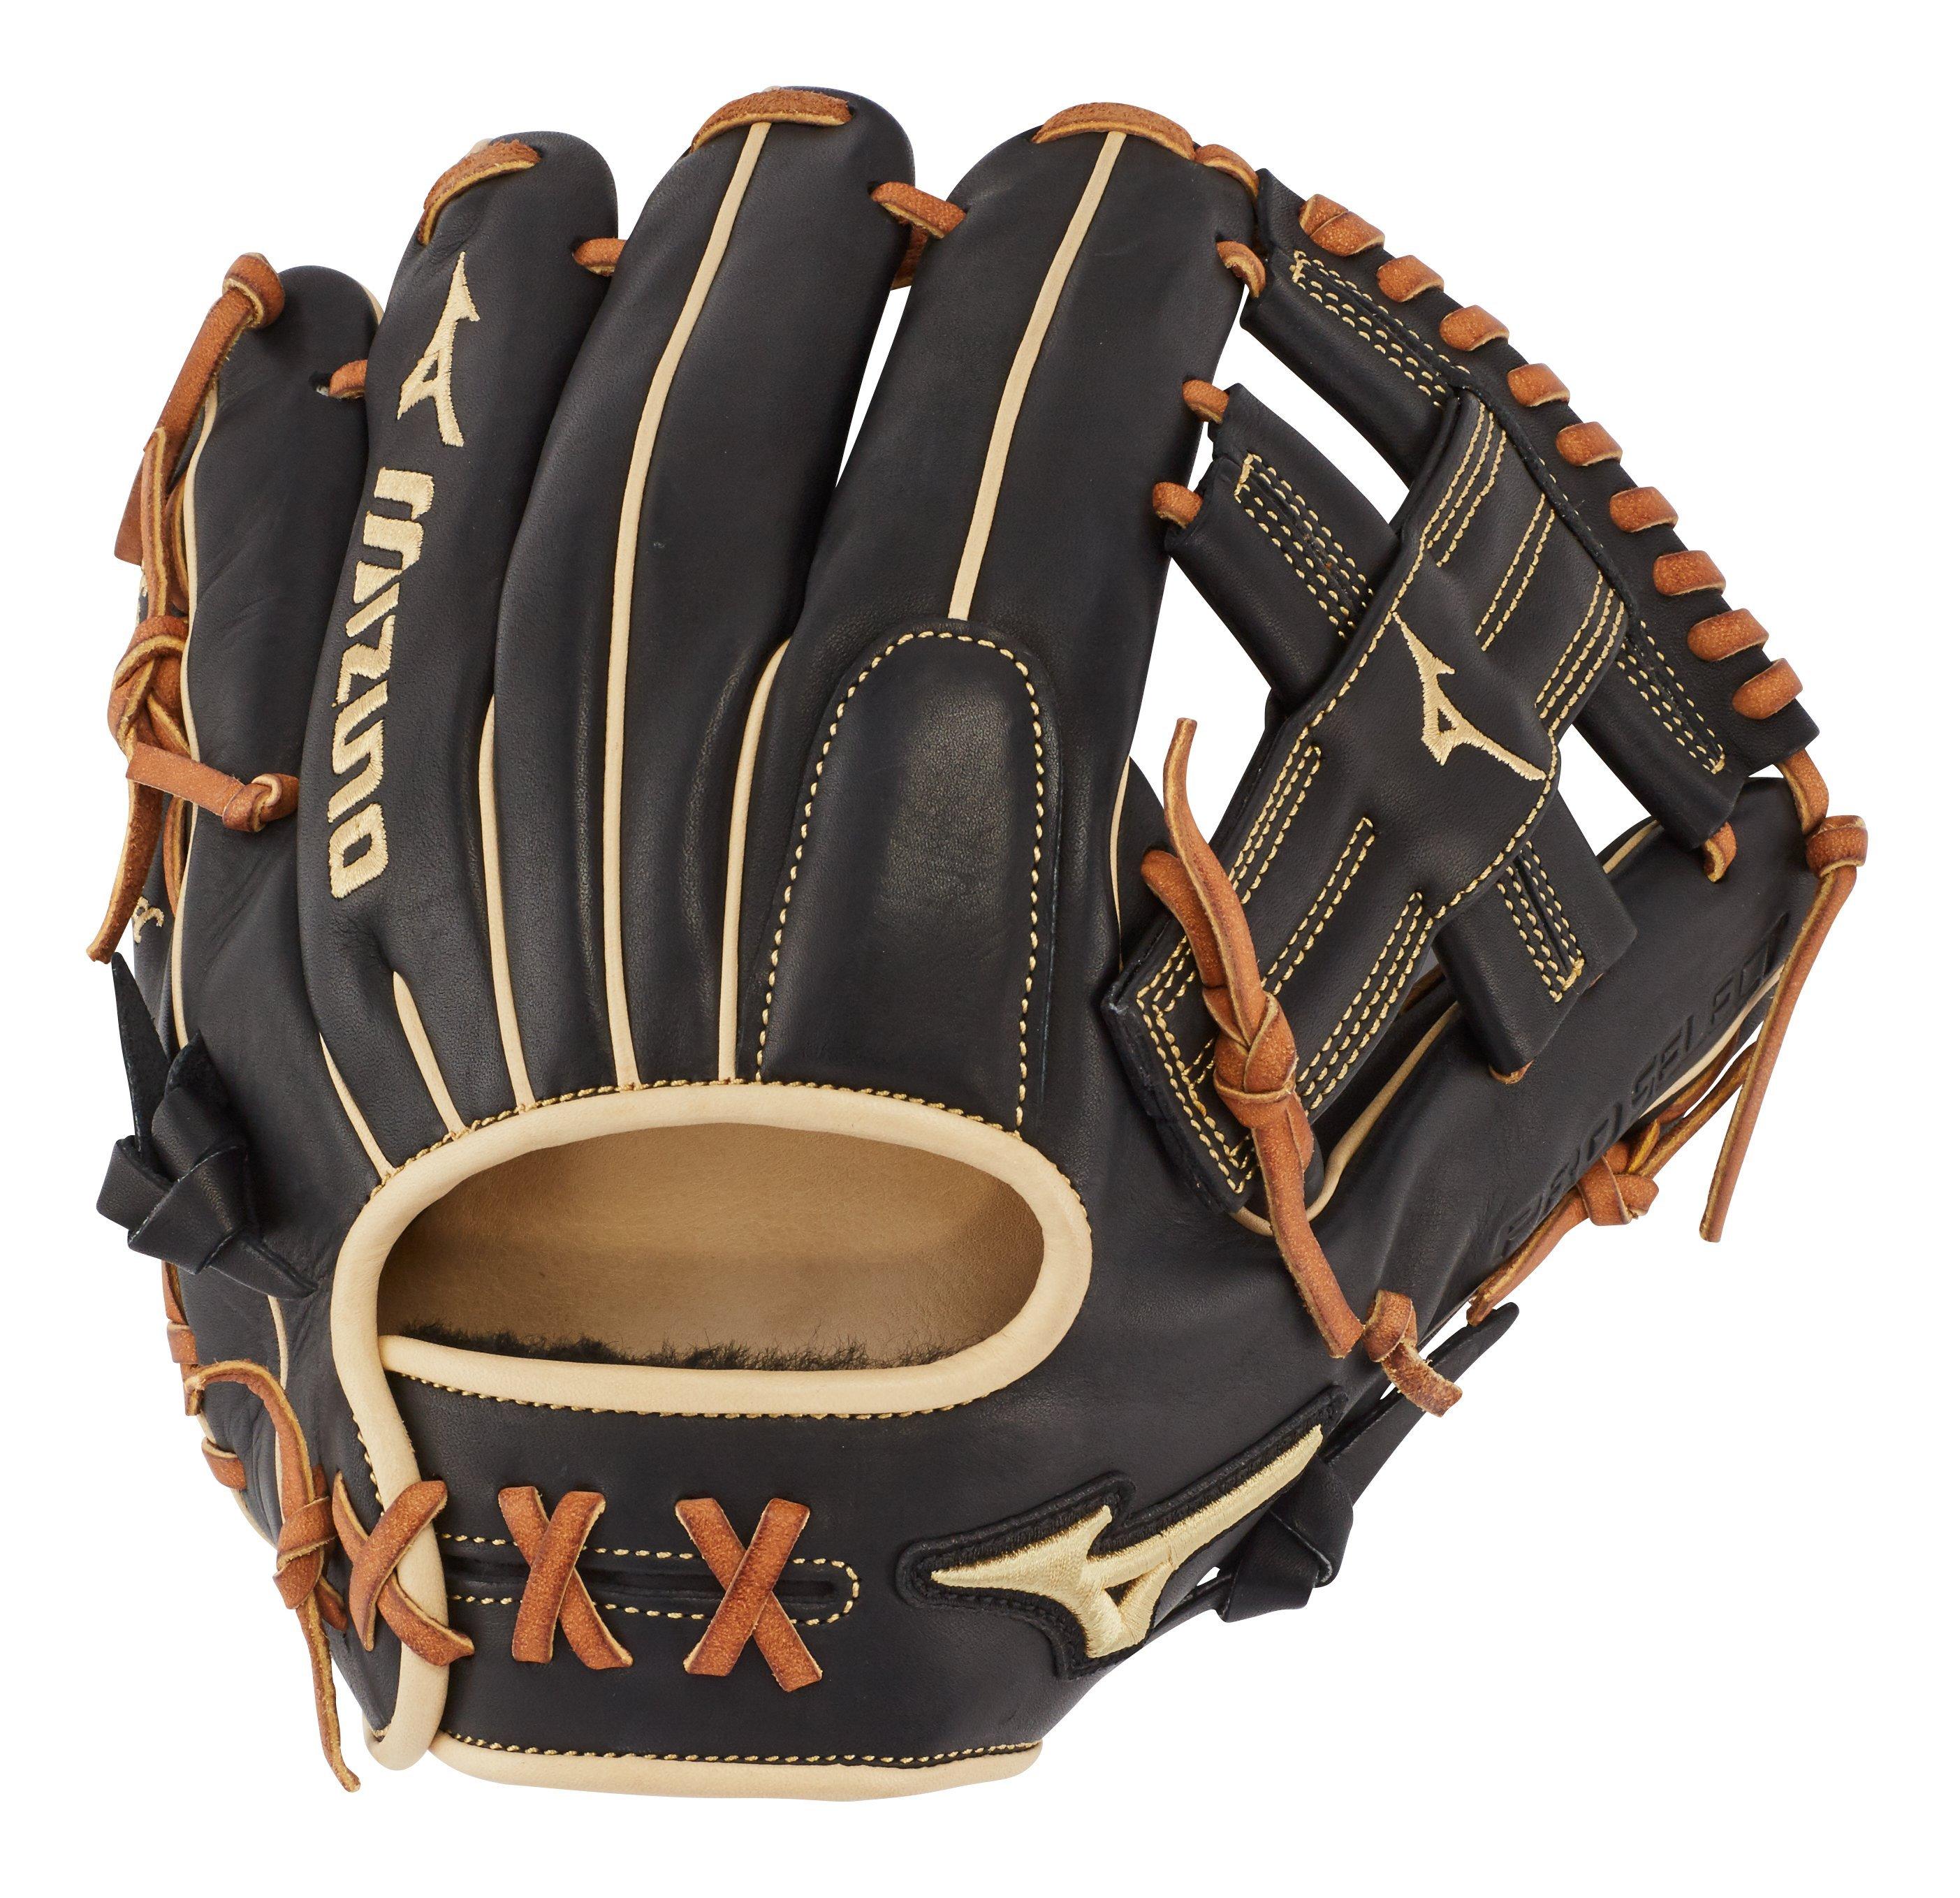 Pro Select Black Series Infield Glove 